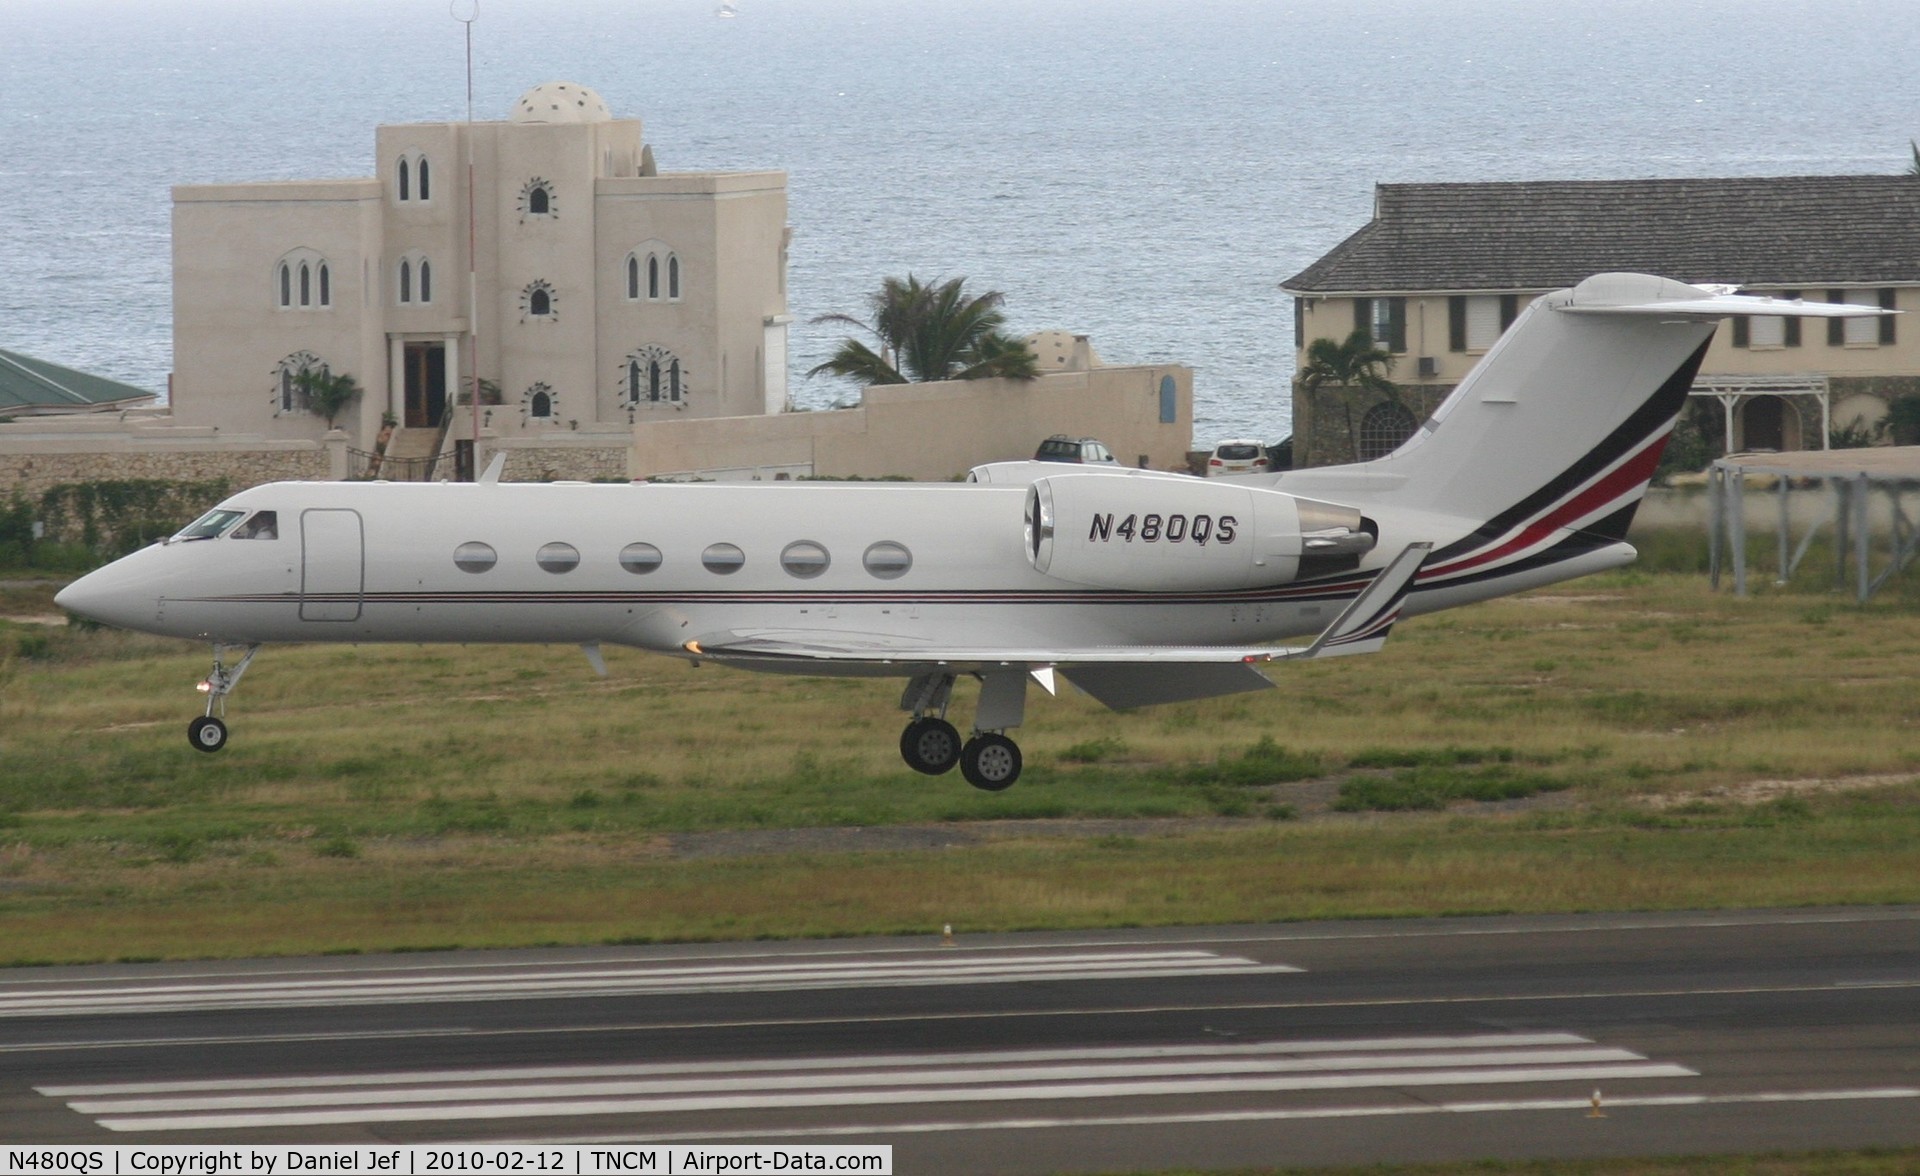 N480QS, 1999 Gulfstream Aerospace G-IV C/N 1380, N980QS landing at TNMC